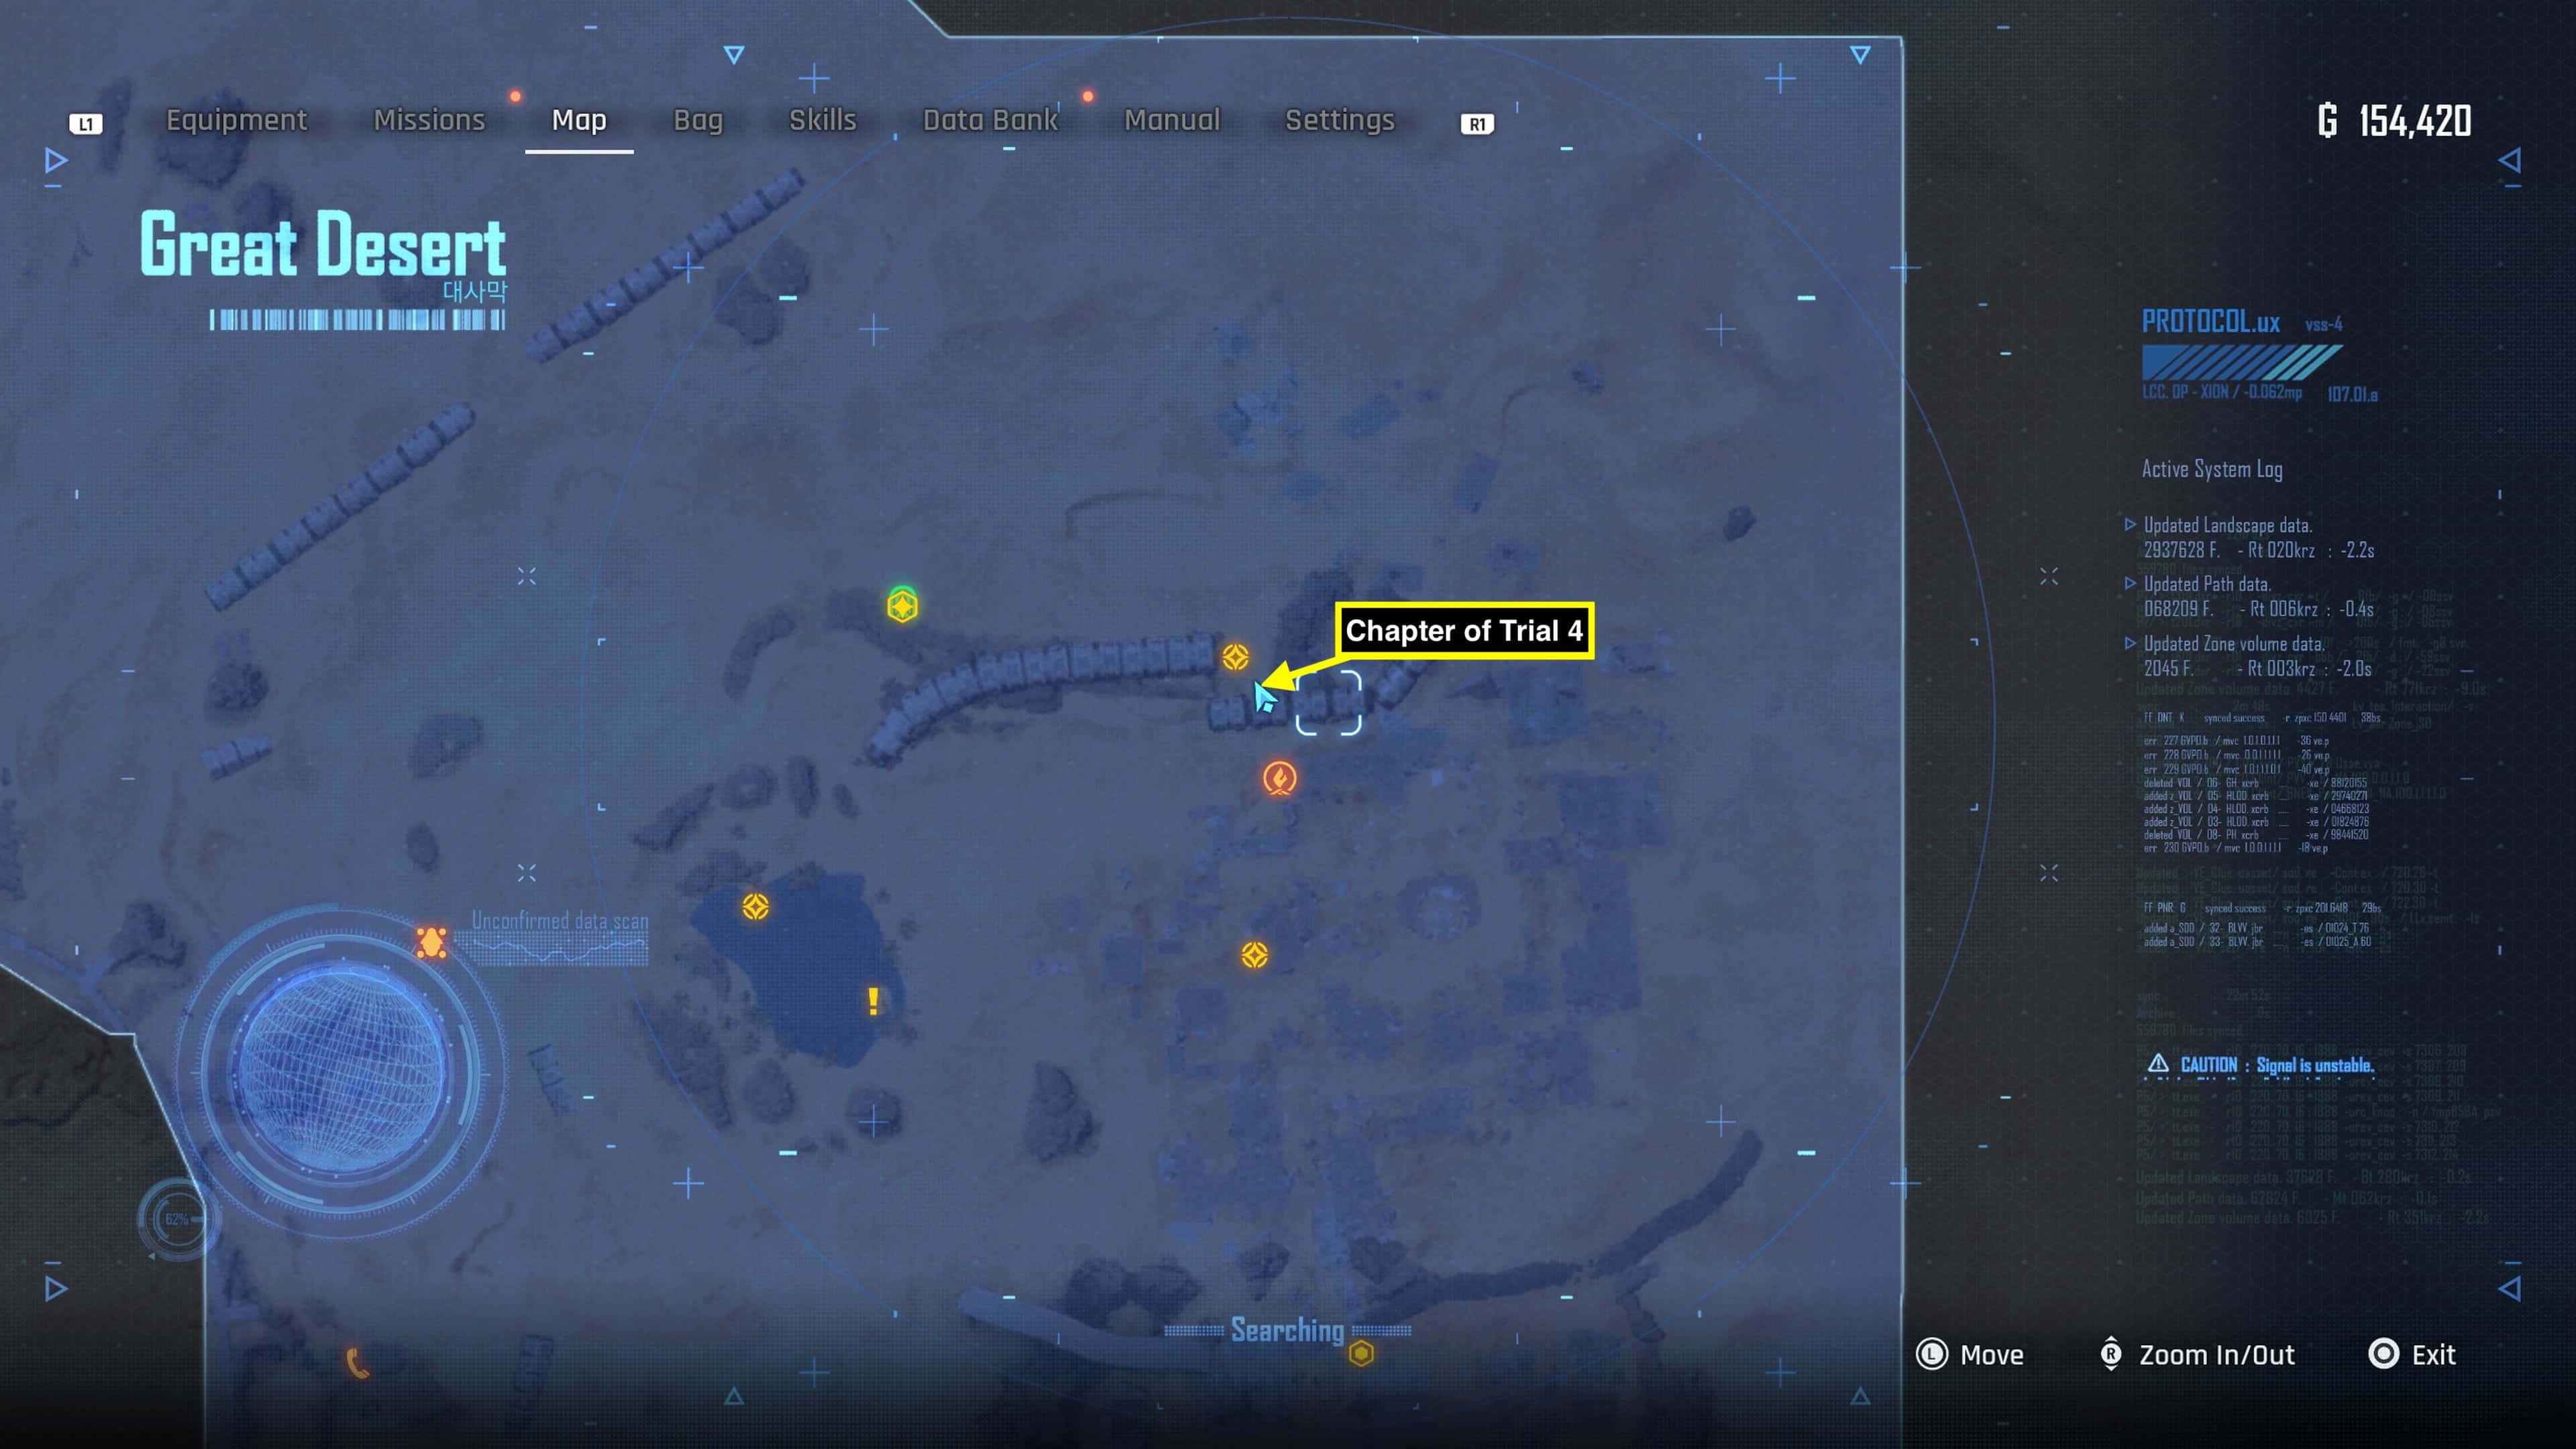 Stellar Blade prayer shrine locations - in-game map showing the great desert